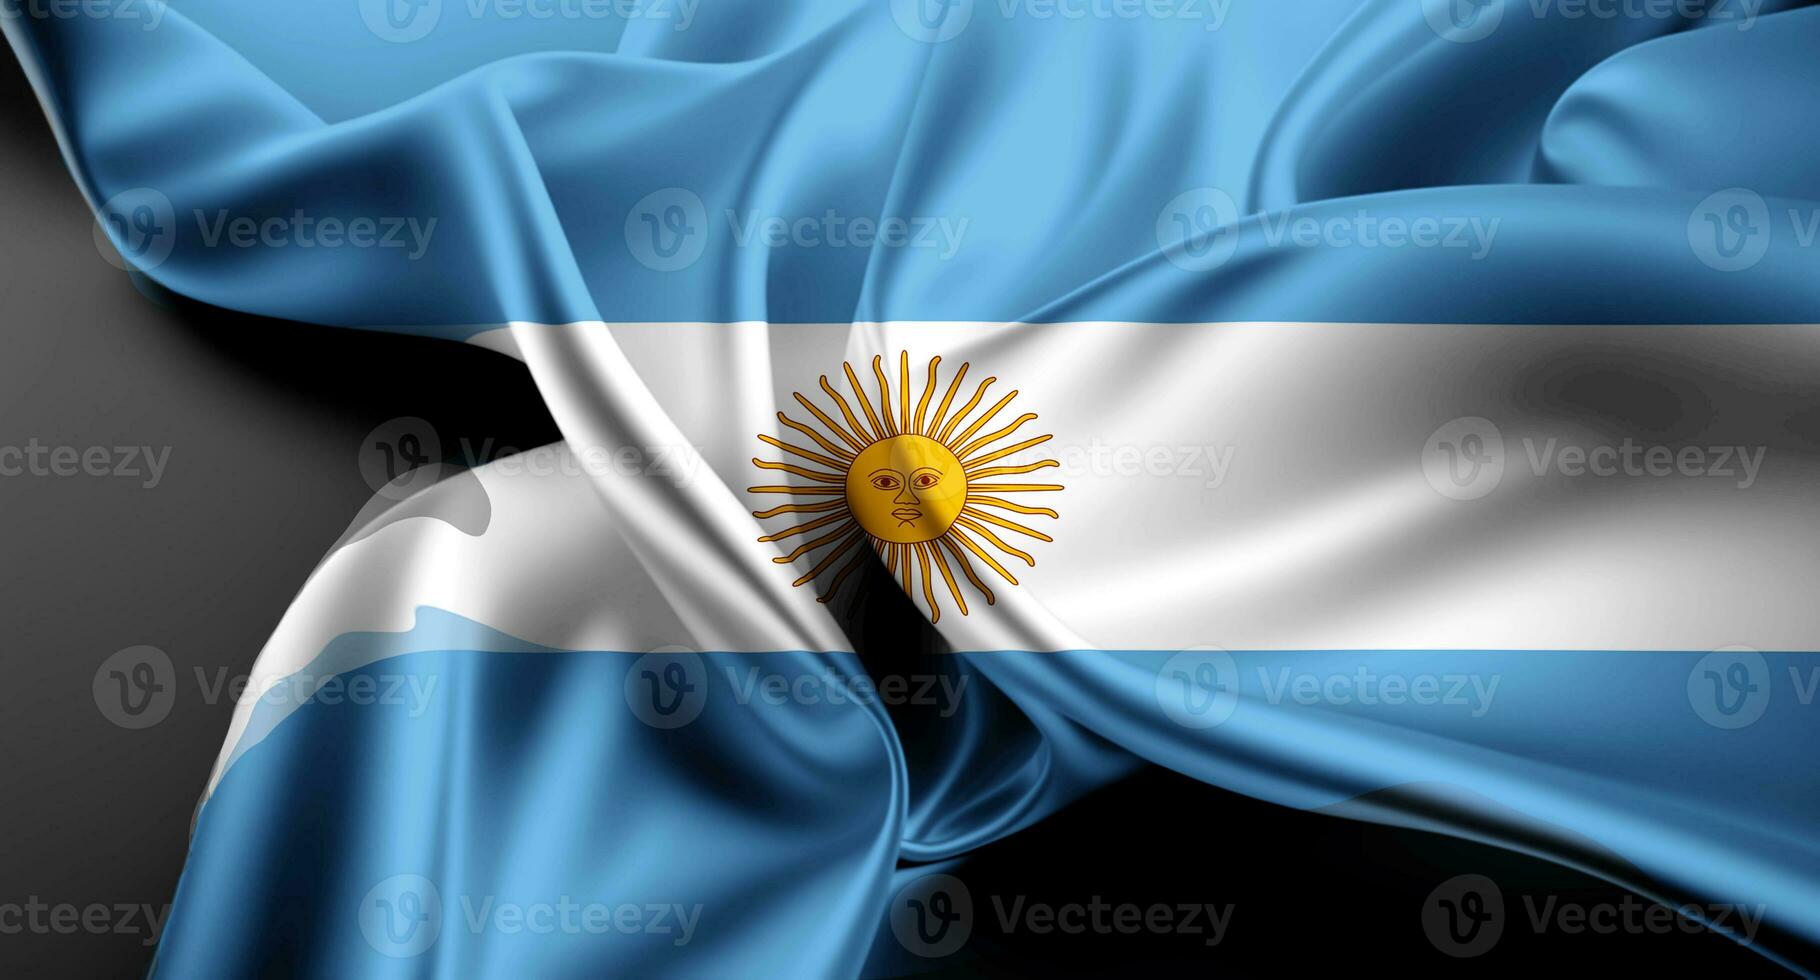 realista e tridimensional ondulado cortinas acrescenta profundidade e movimento para a nacional bandeira do Argentina. foto